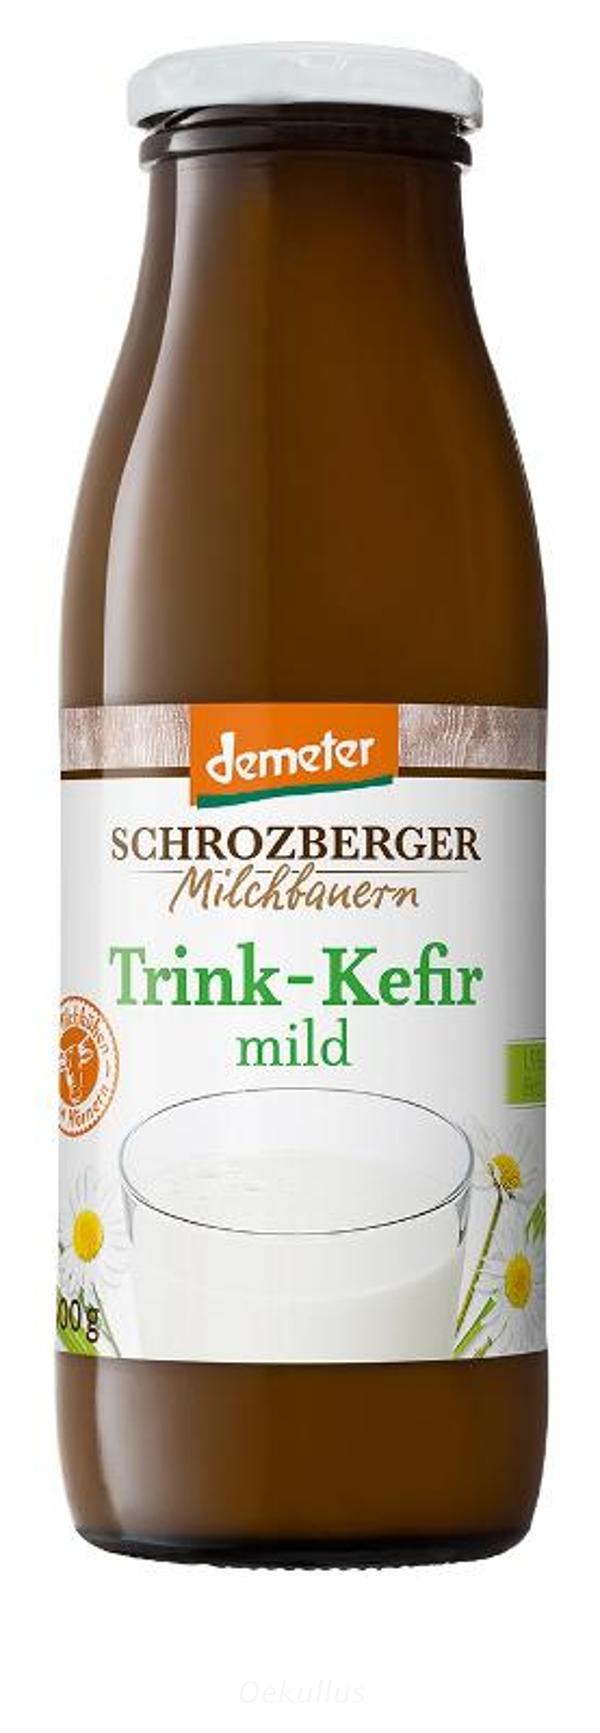 Produktfoto zu Trink-Kefir mild 1,5%